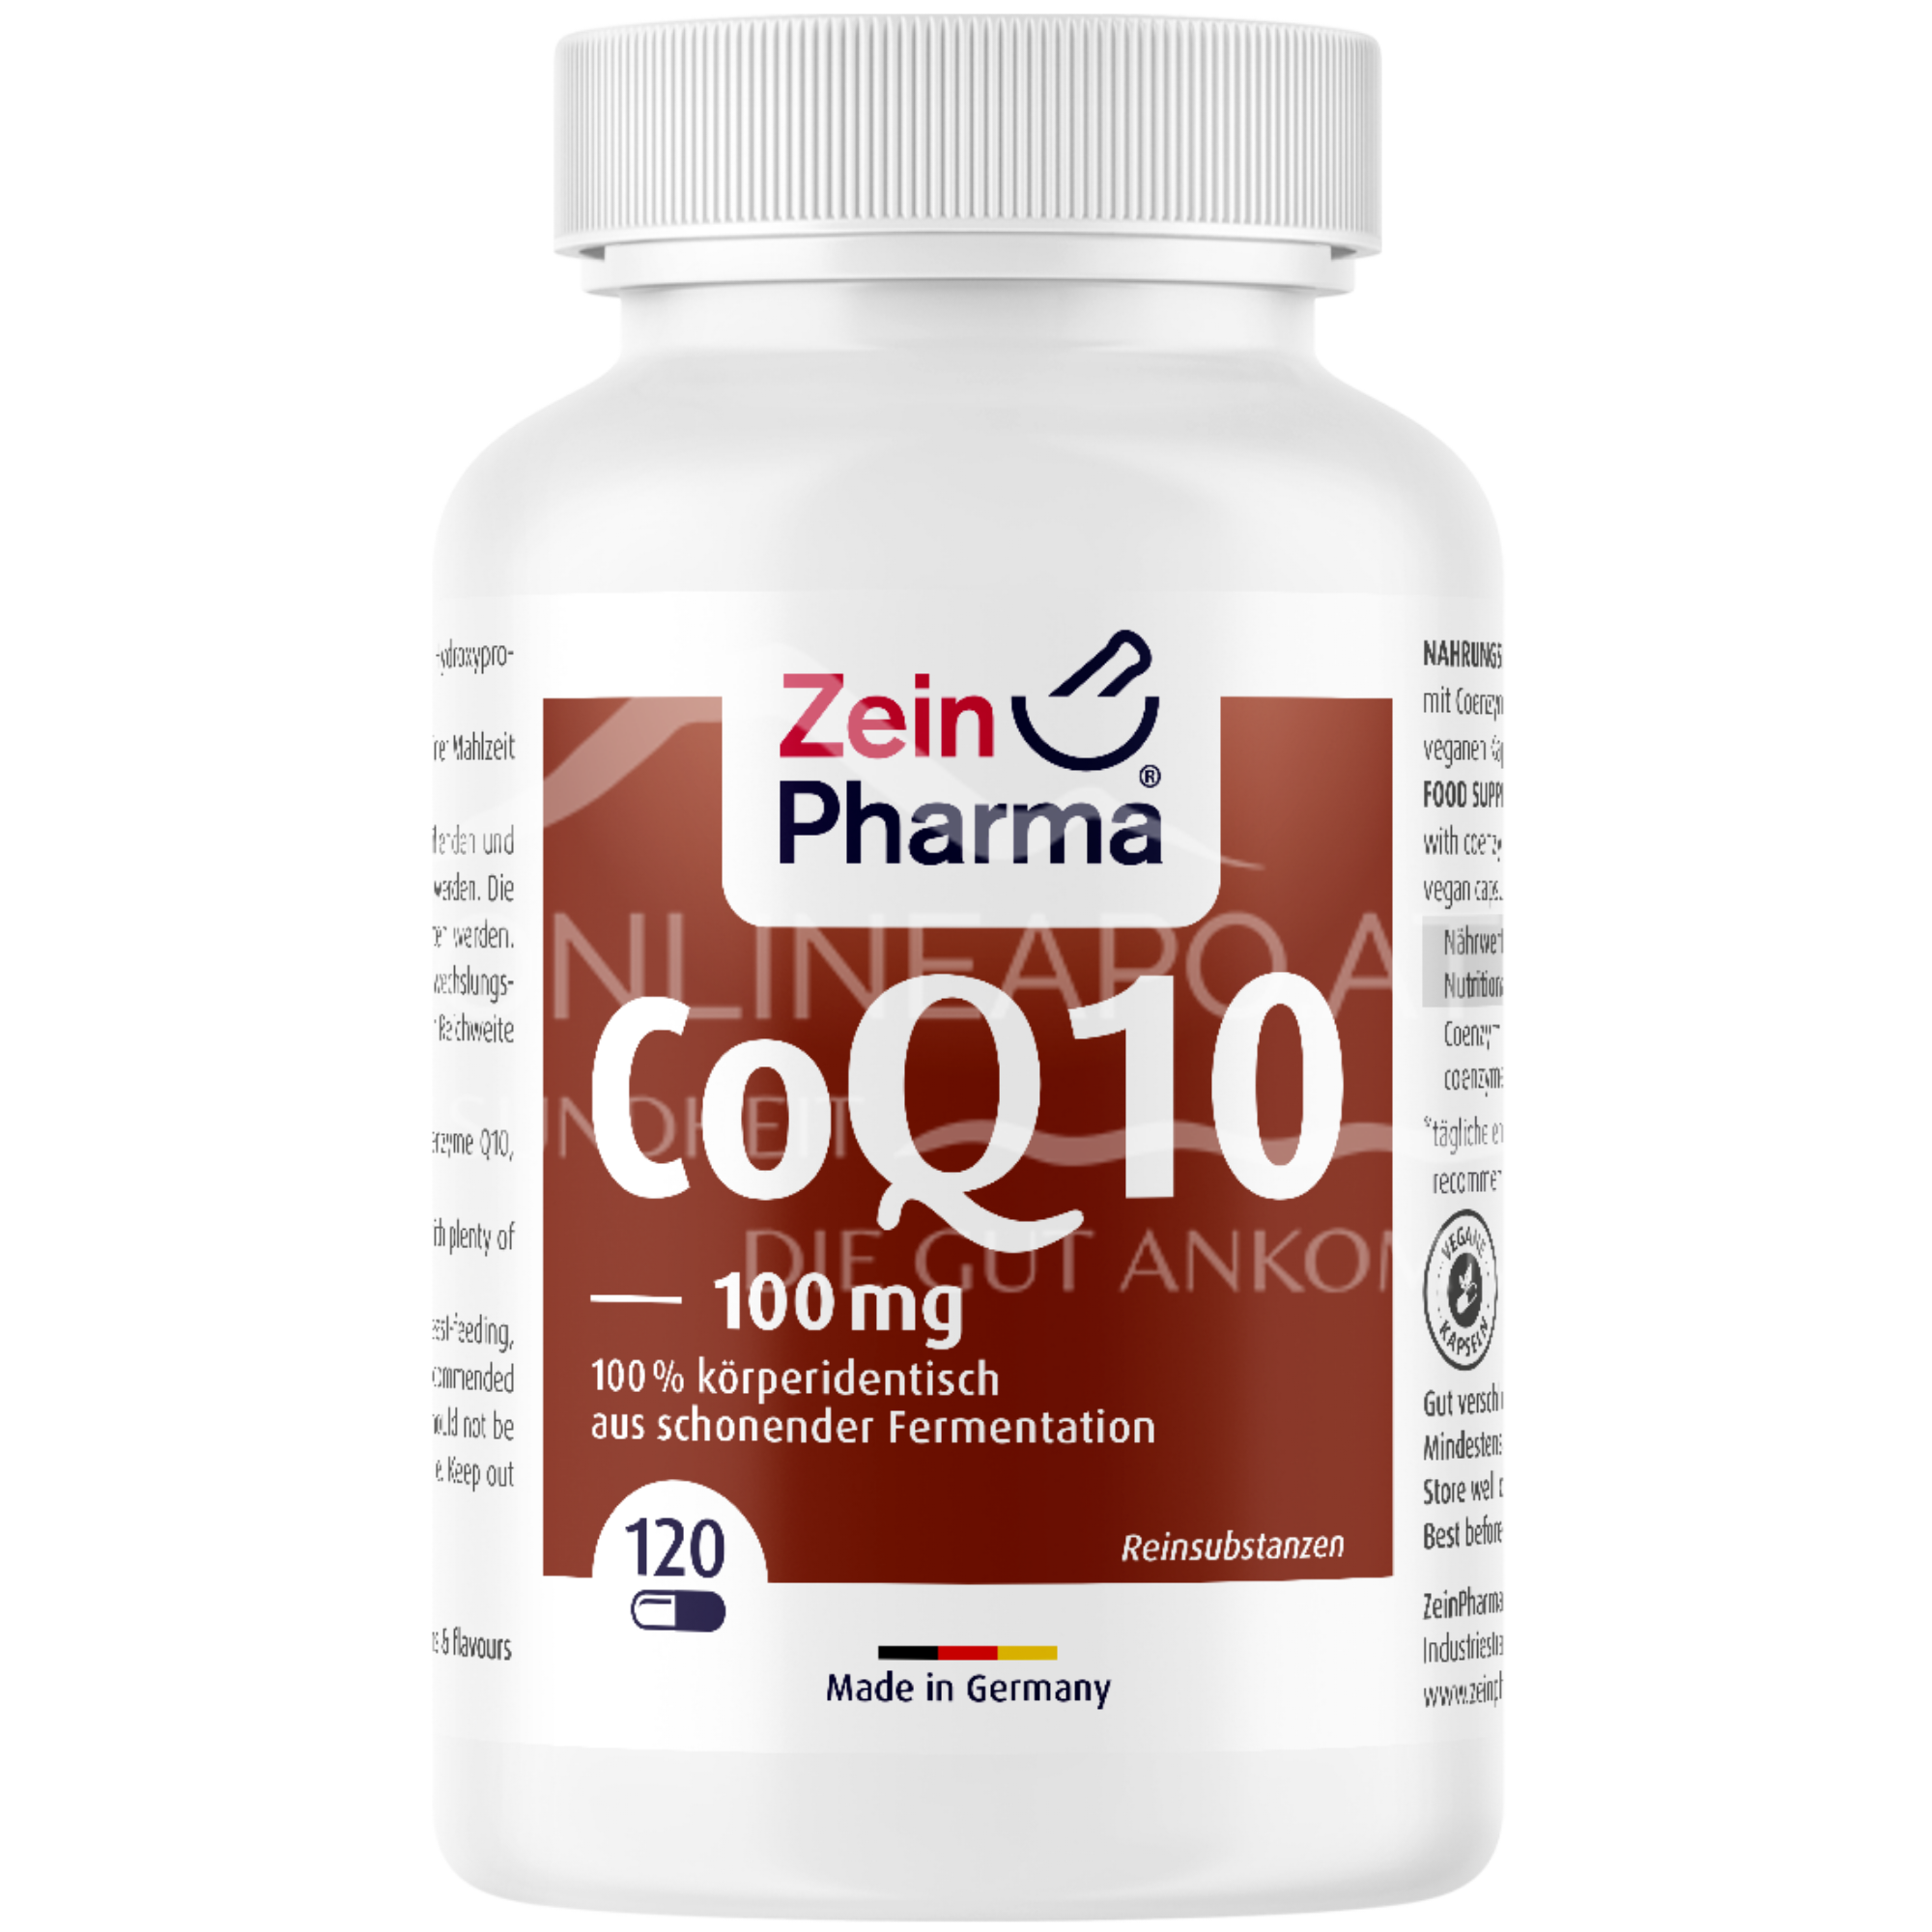 Zeinpharma Coenzym Q10 100 mg Kapseln